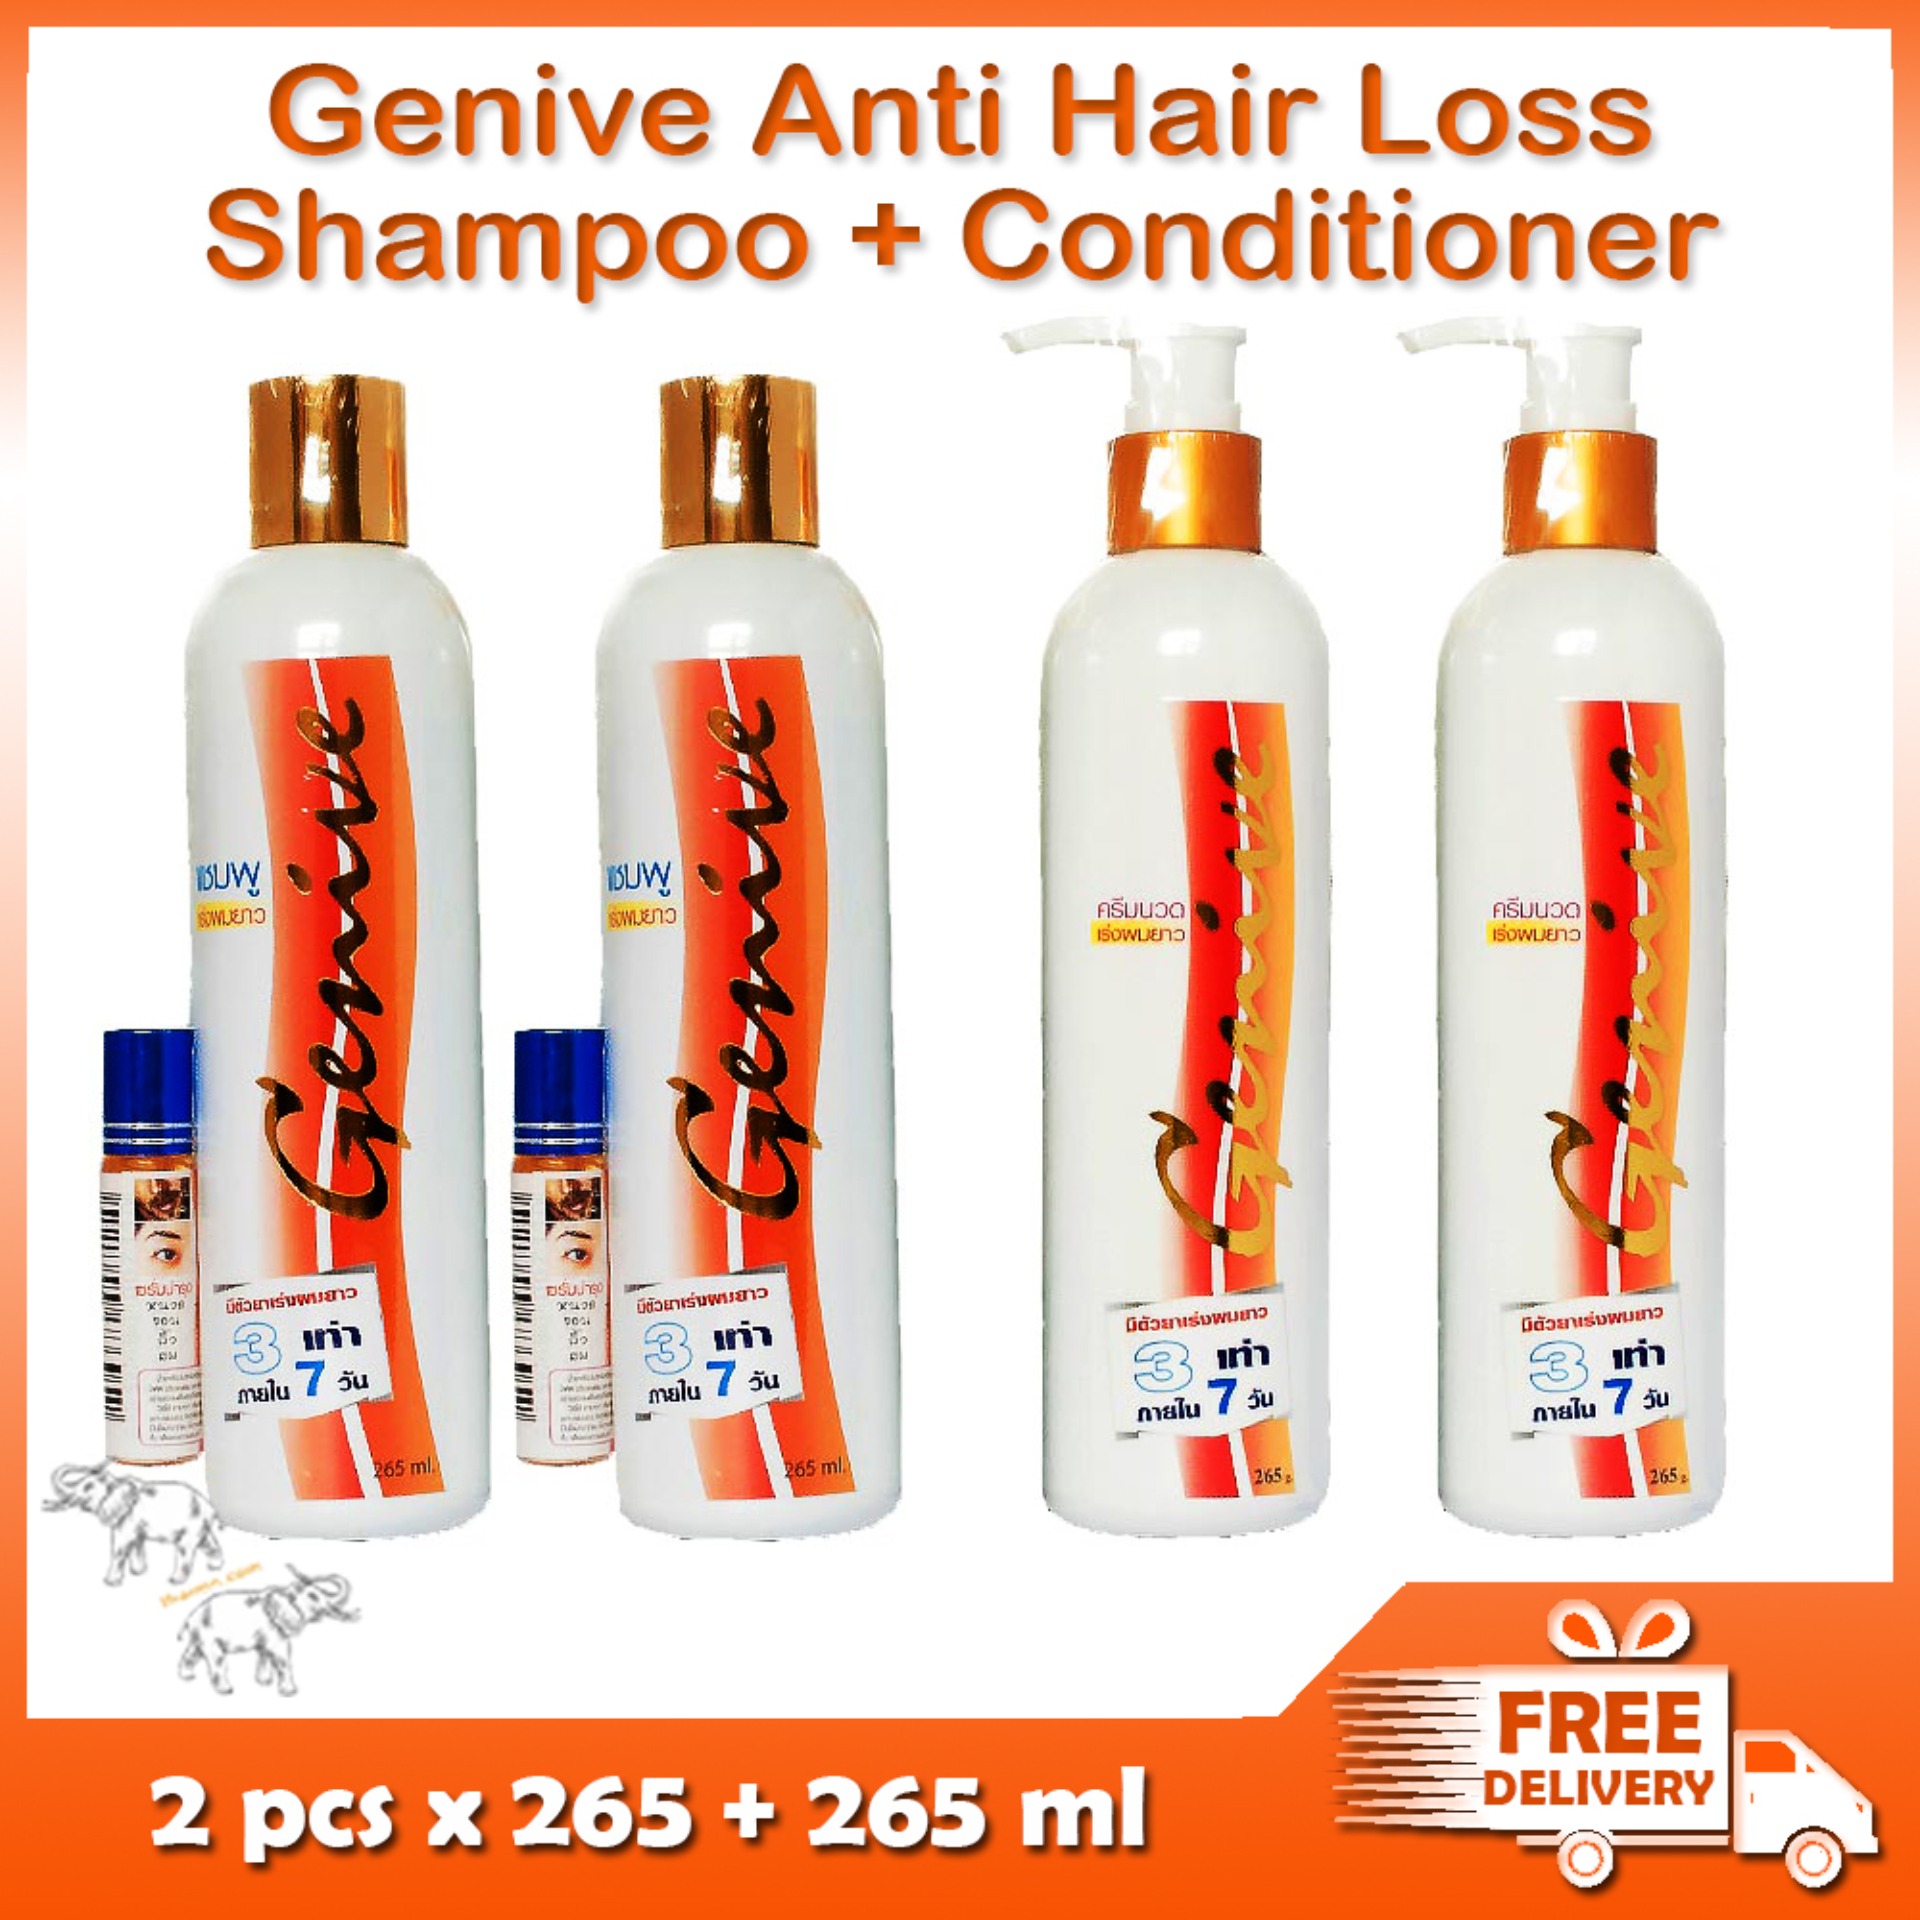 Genive SET  Anti Hair Loss Shampoo - เจนีเว่ ป้องกัน ผมบาง แชมพู แชมพูปลูกผม 265 ml + Anti Hair Loss and Grow Hair Conditioner เจนีเว่ ครีมนวด หยุดผมร่วง ปลูกผมใหม่ 265 ml x 2